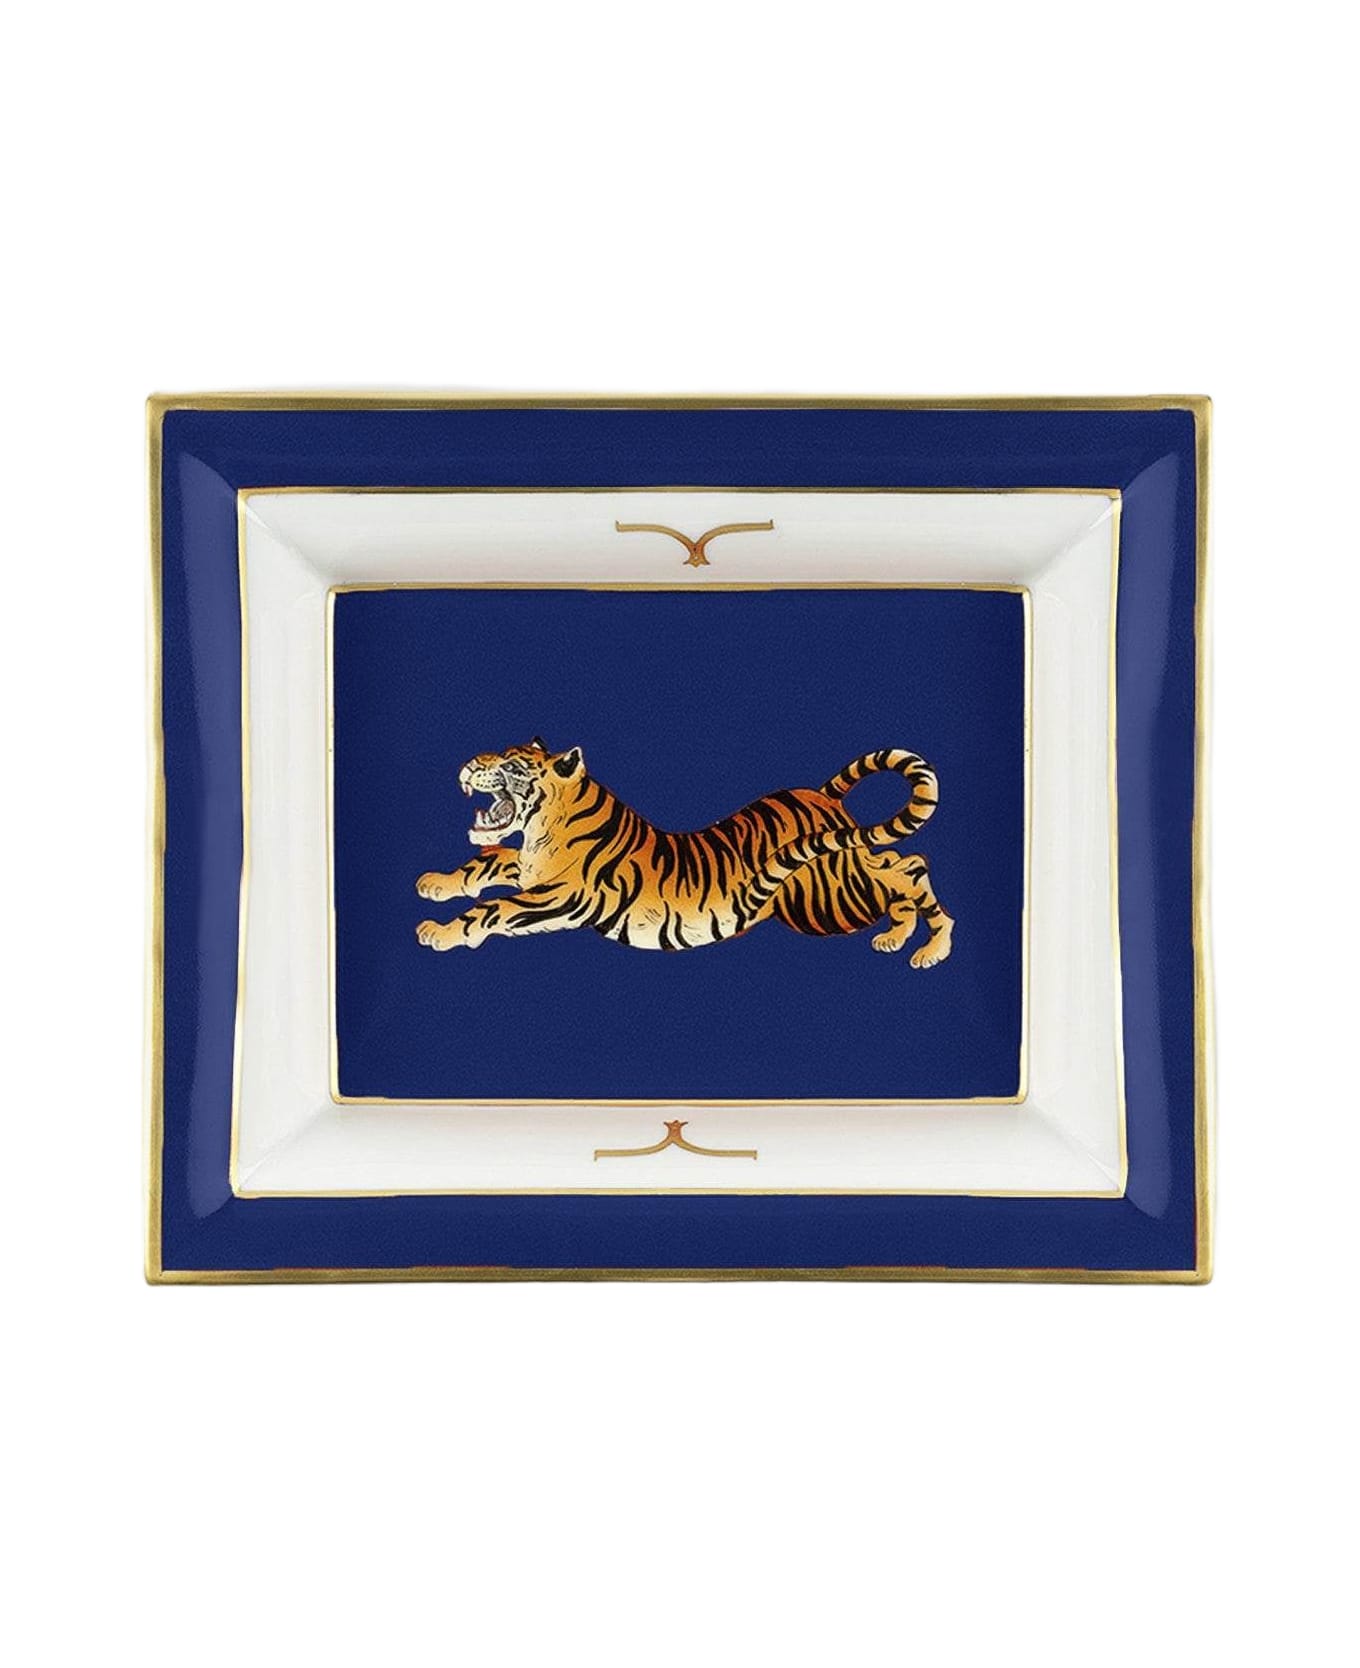 Larusmiani Pocket Emptier 'tigre' Tray - Blue トレー